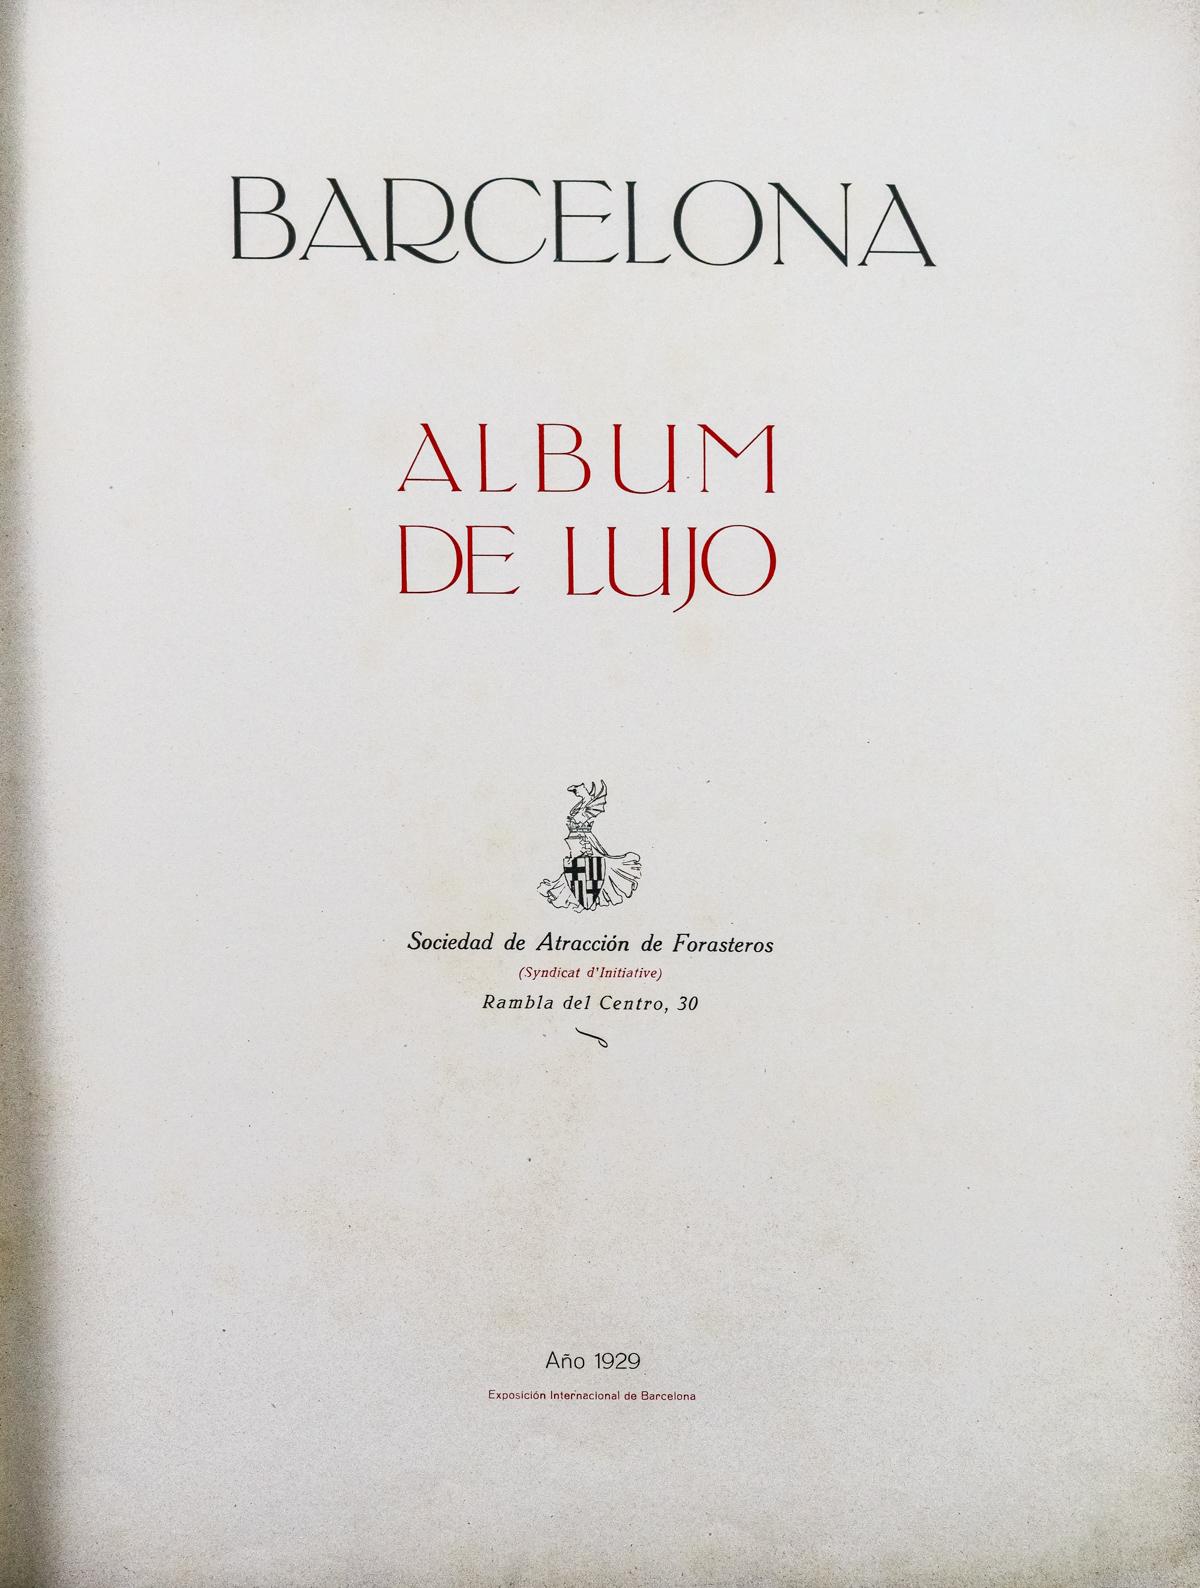 "BARCELONA, ALBUM DE LUJO. VOL. 1"